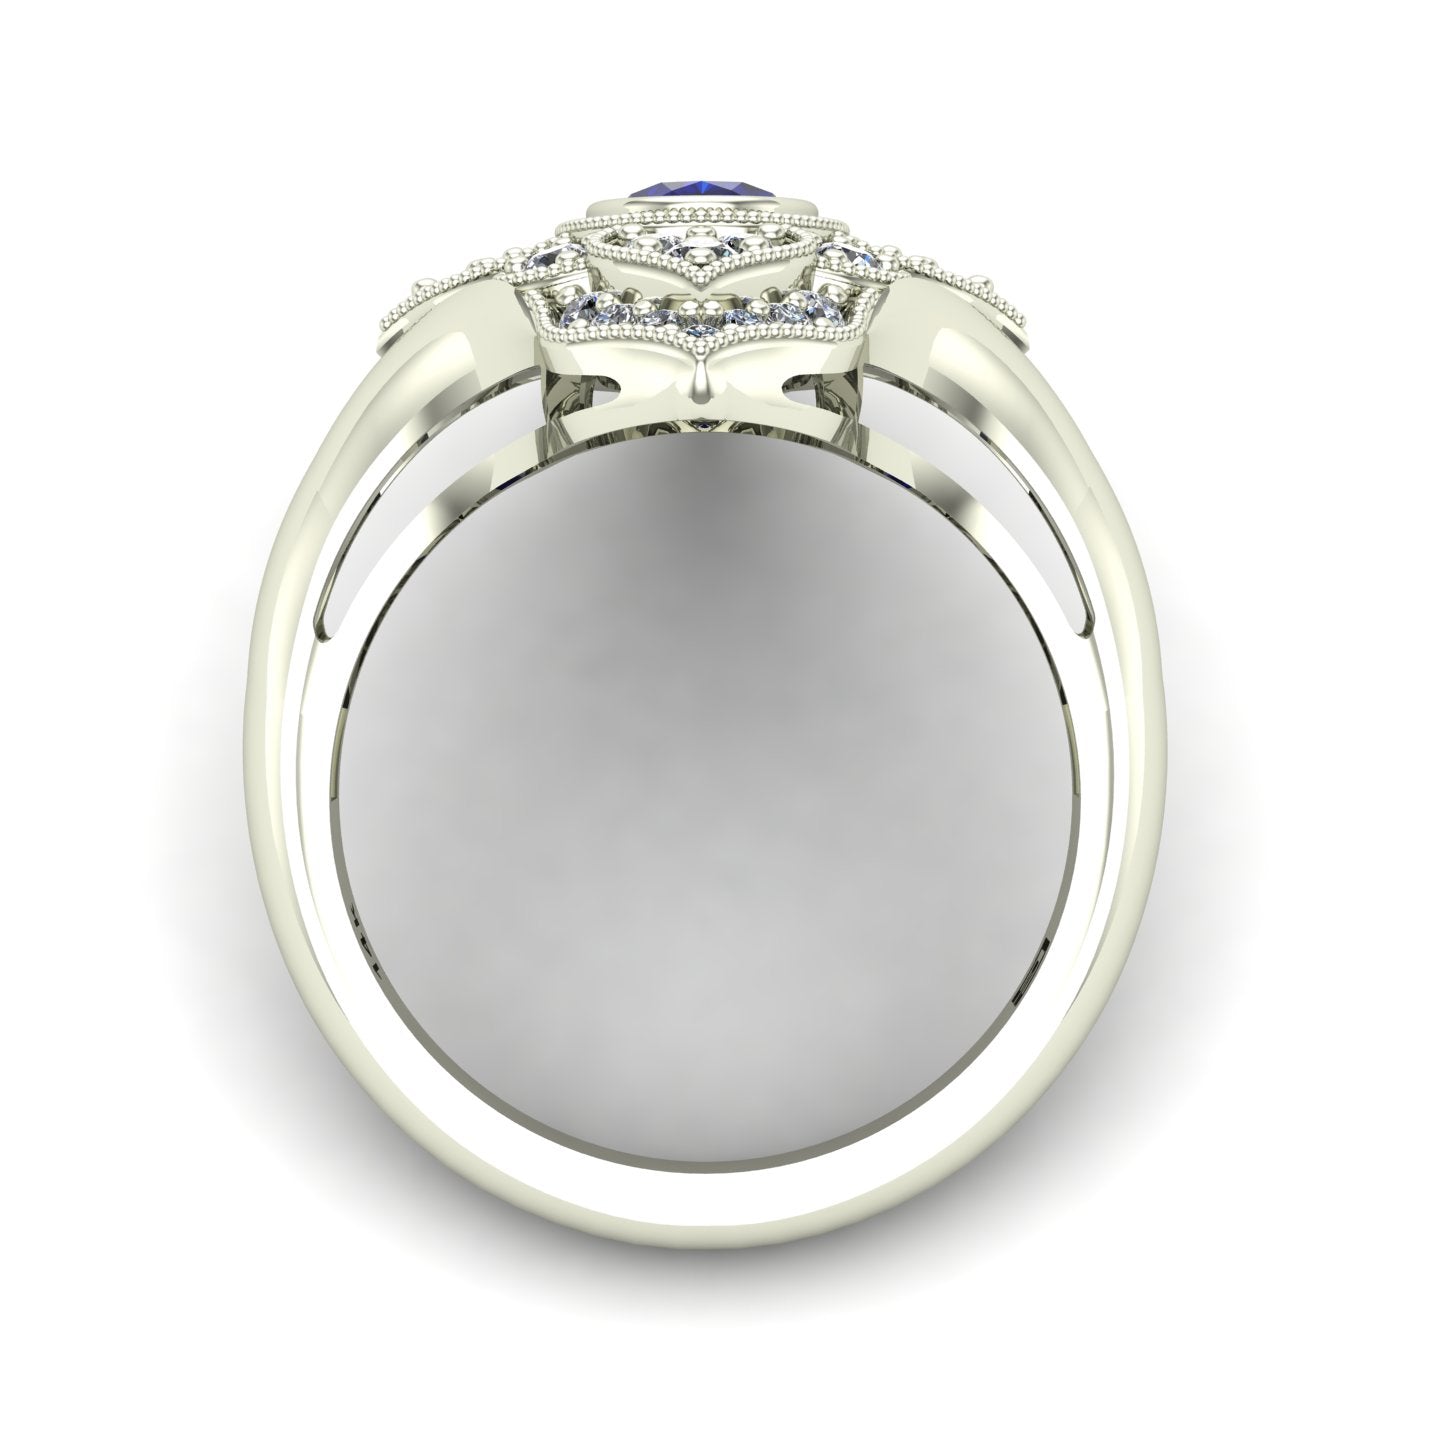 bezel set oval blue sapphire and diamond paneled ring in 14k white gold - Charles Babb Designs - through finger view